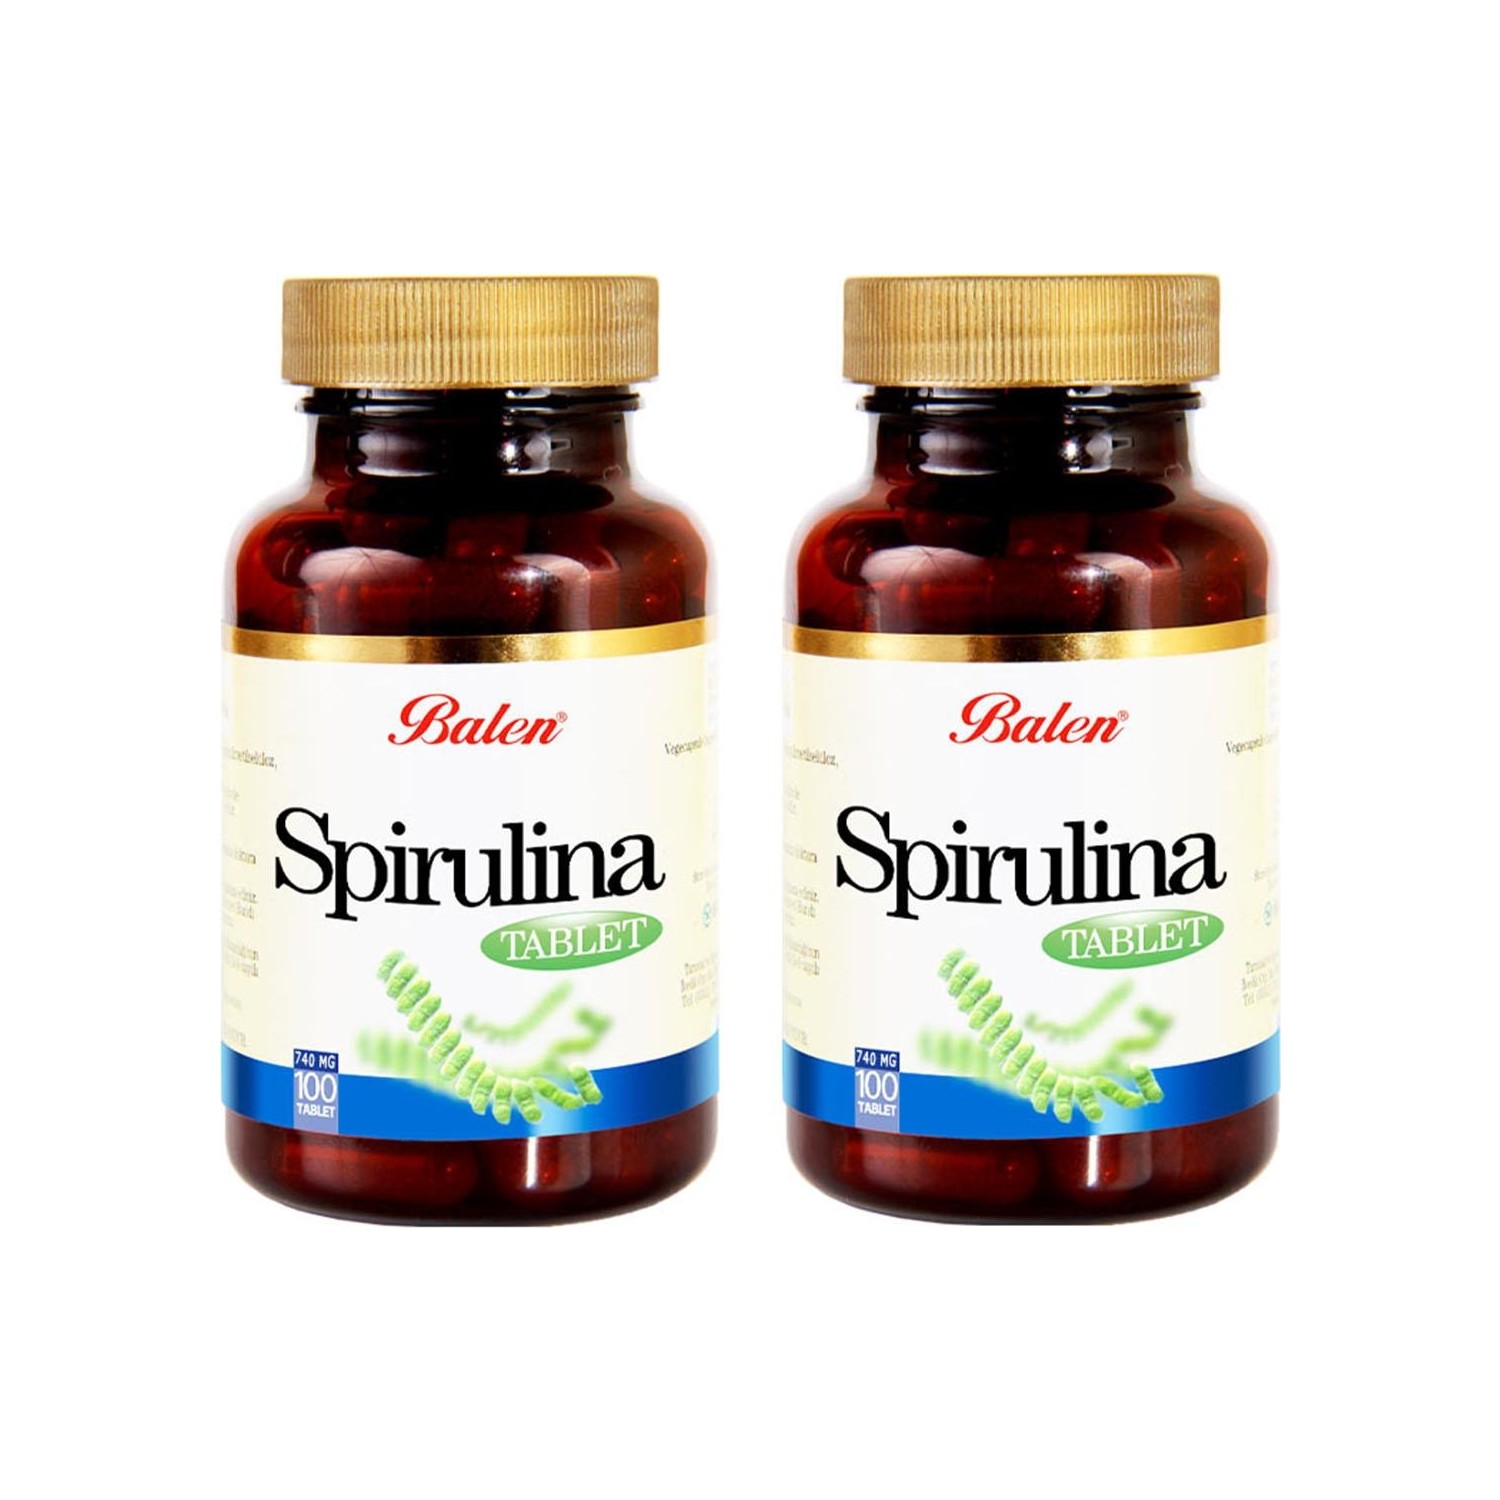 Пищевая добавка Balen Spirulina 740 мг, 2 упаковки по 100 таблеток пищевая добавка balen spirulina 740 мг 100 таблеток